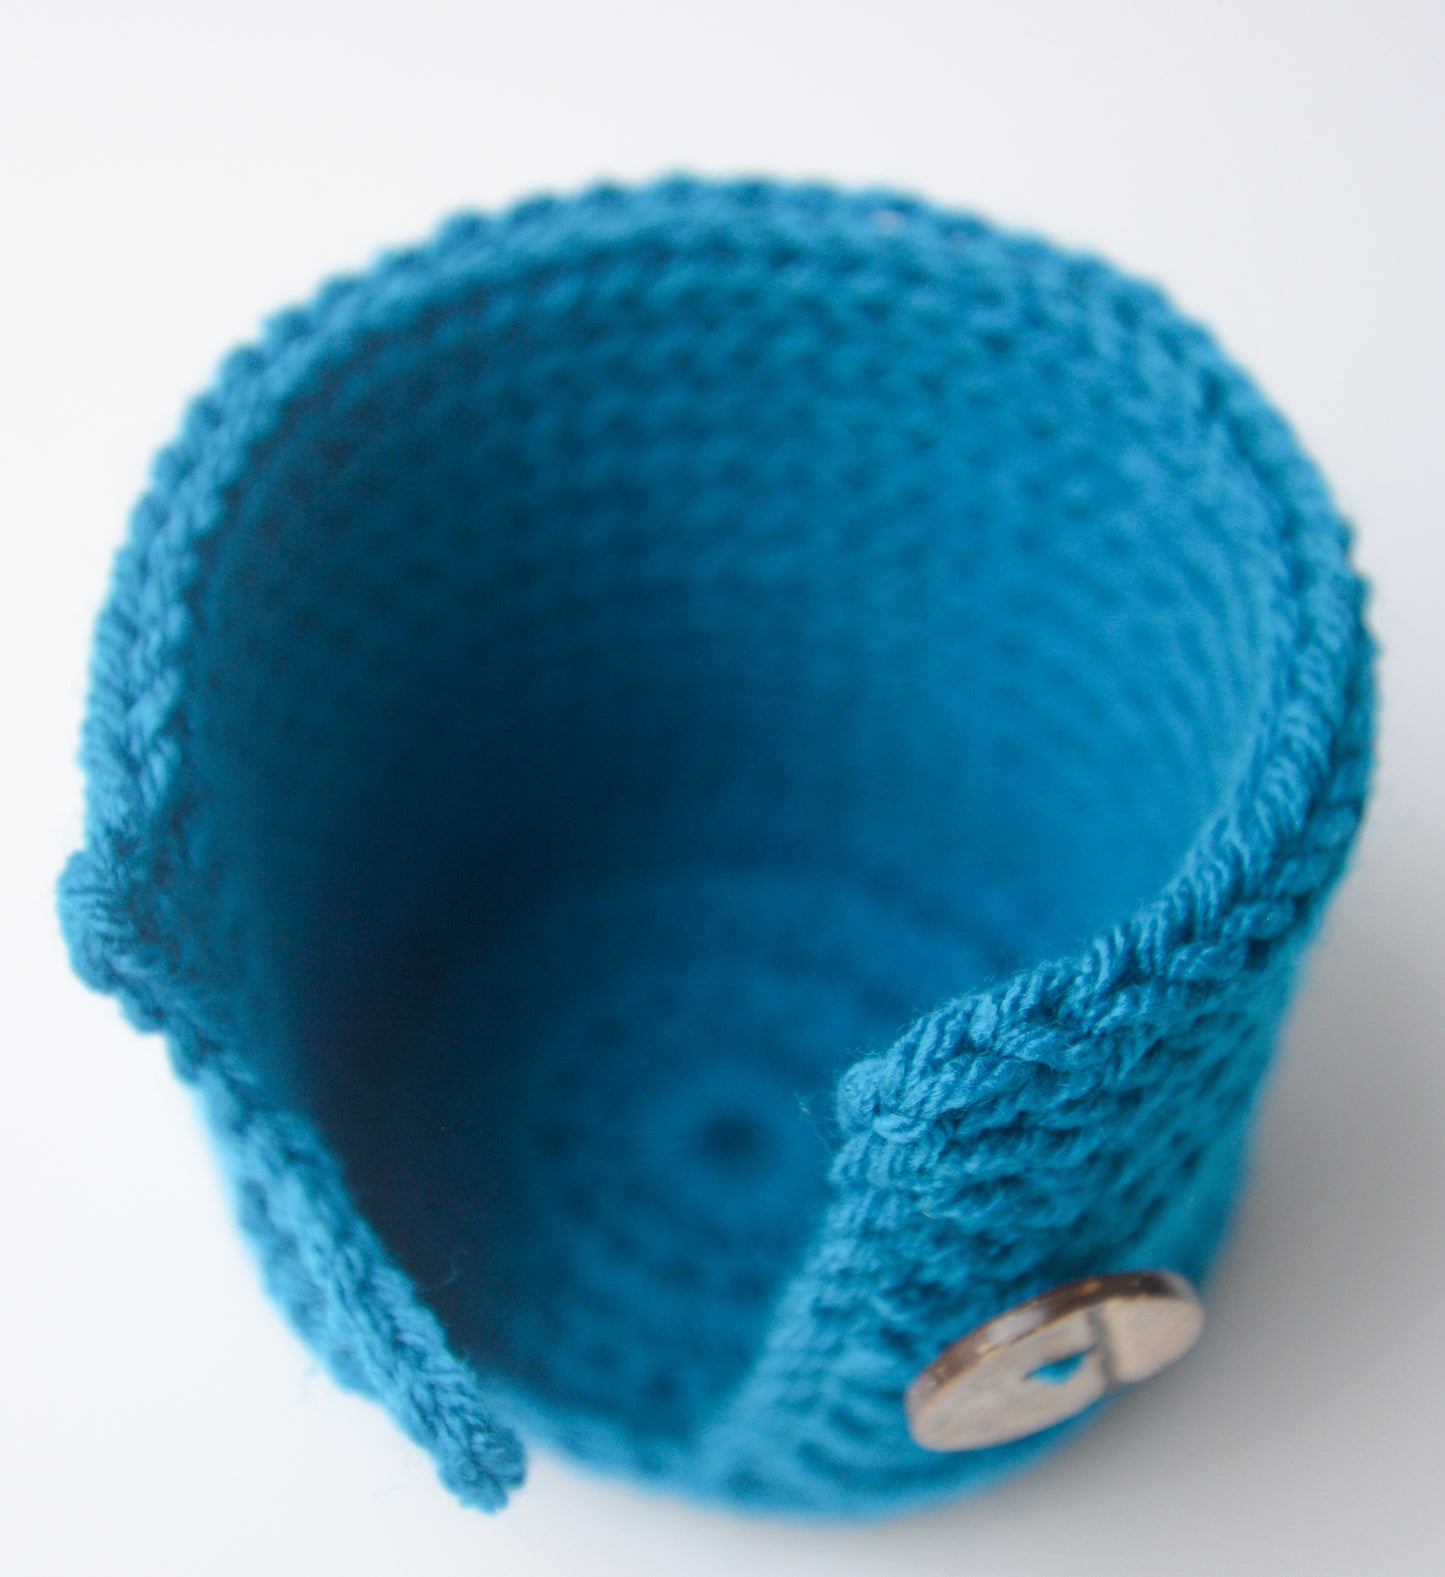 Knitting Machine Pattern, Mug Cozy and Cup Sleeve PDF